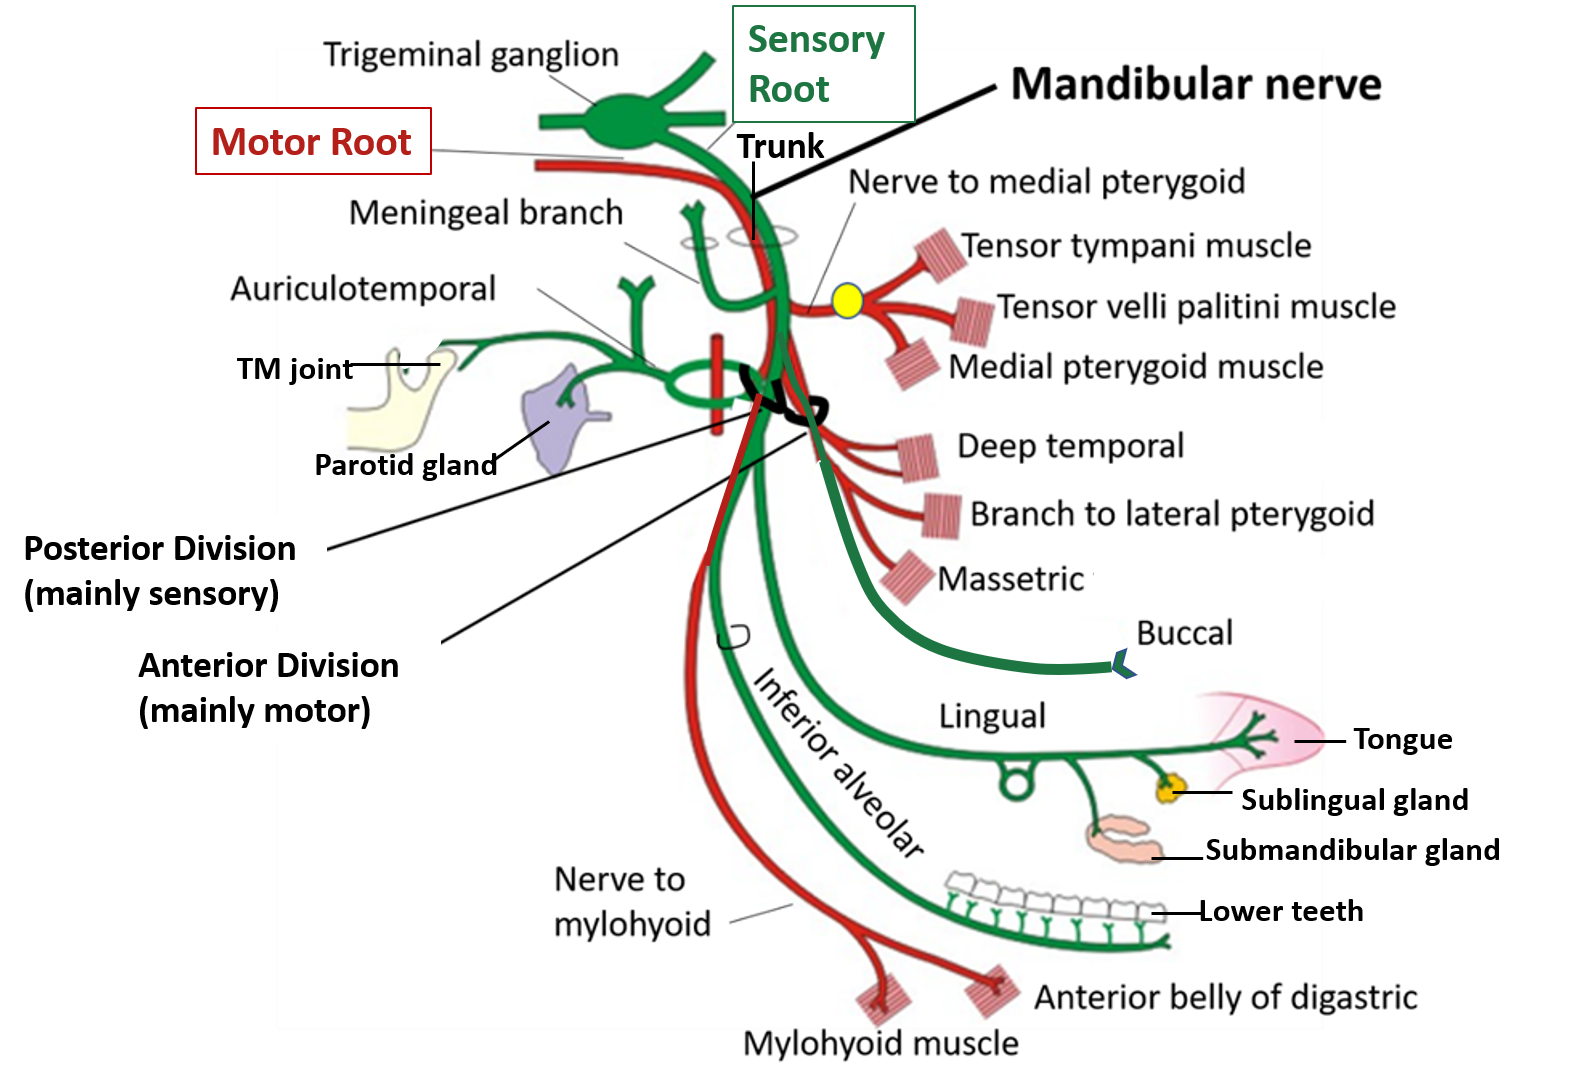 mandibular nerve -branches